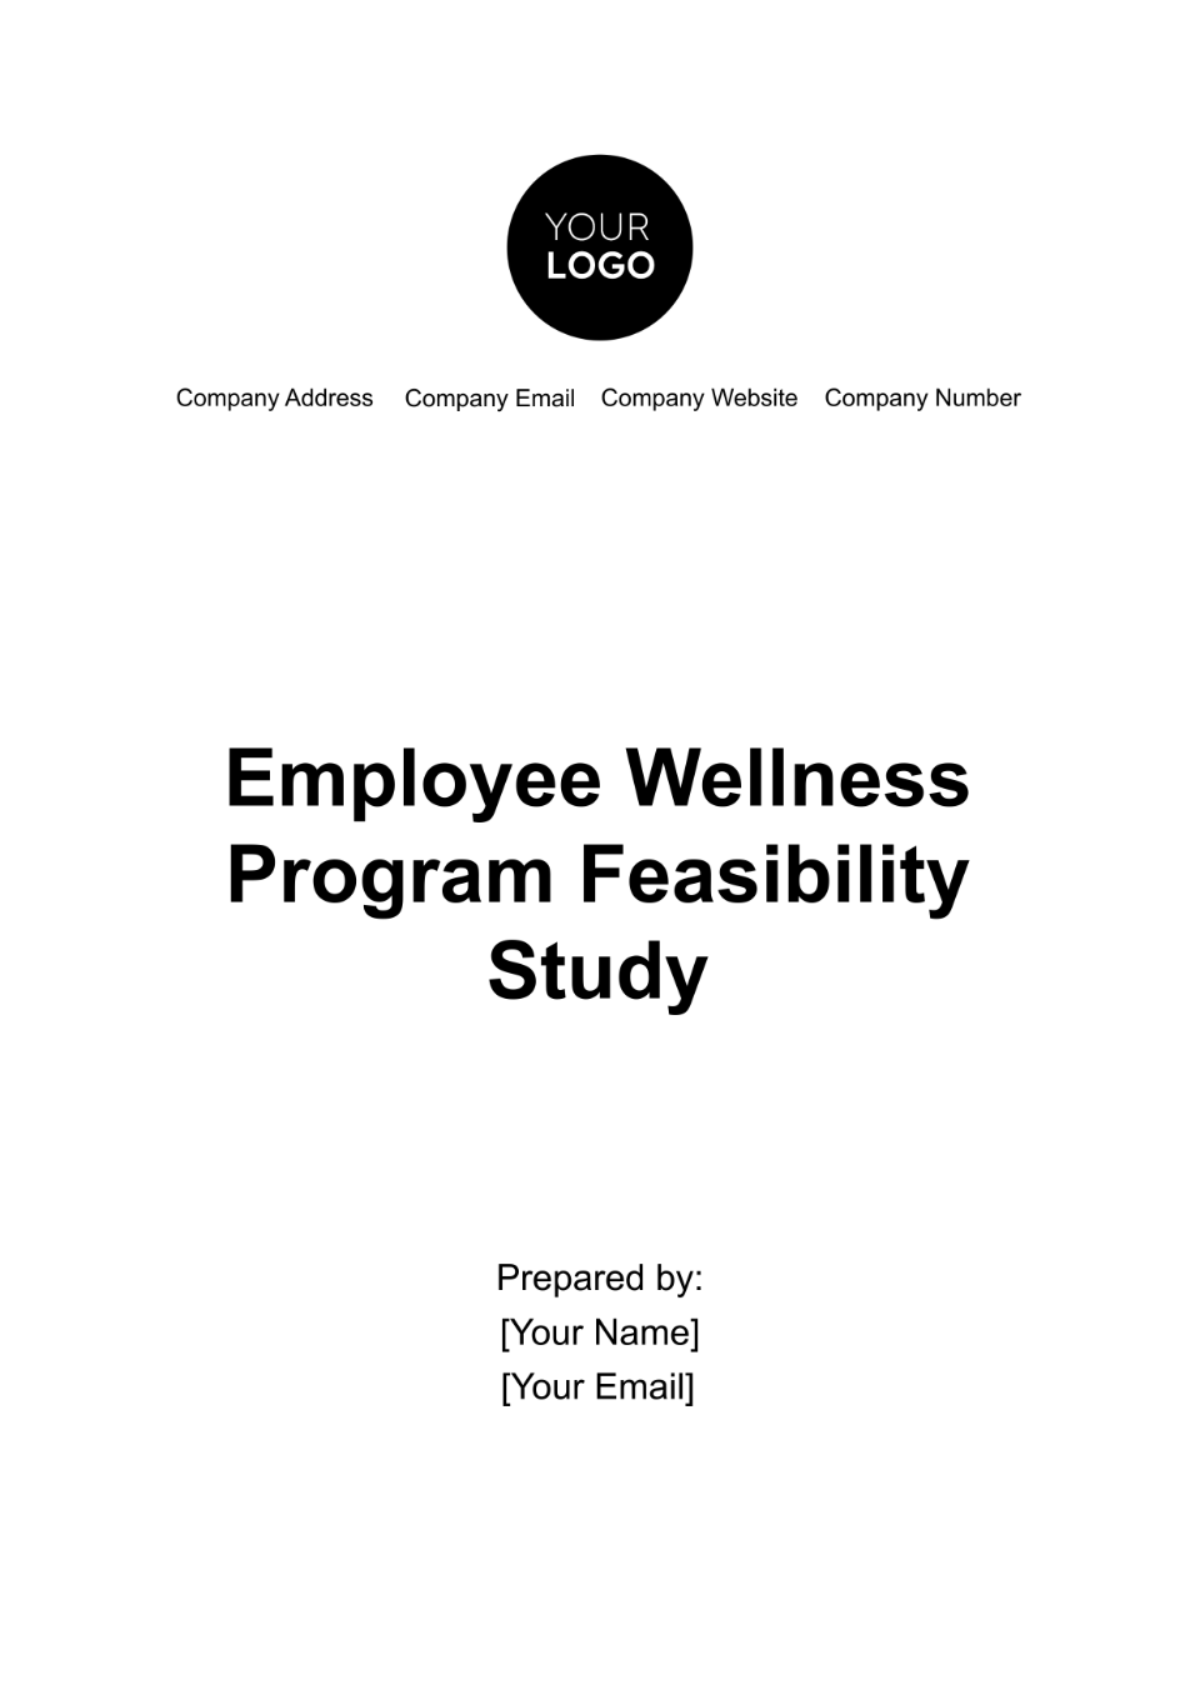 Employee Wellness Program Feasibility Study Template